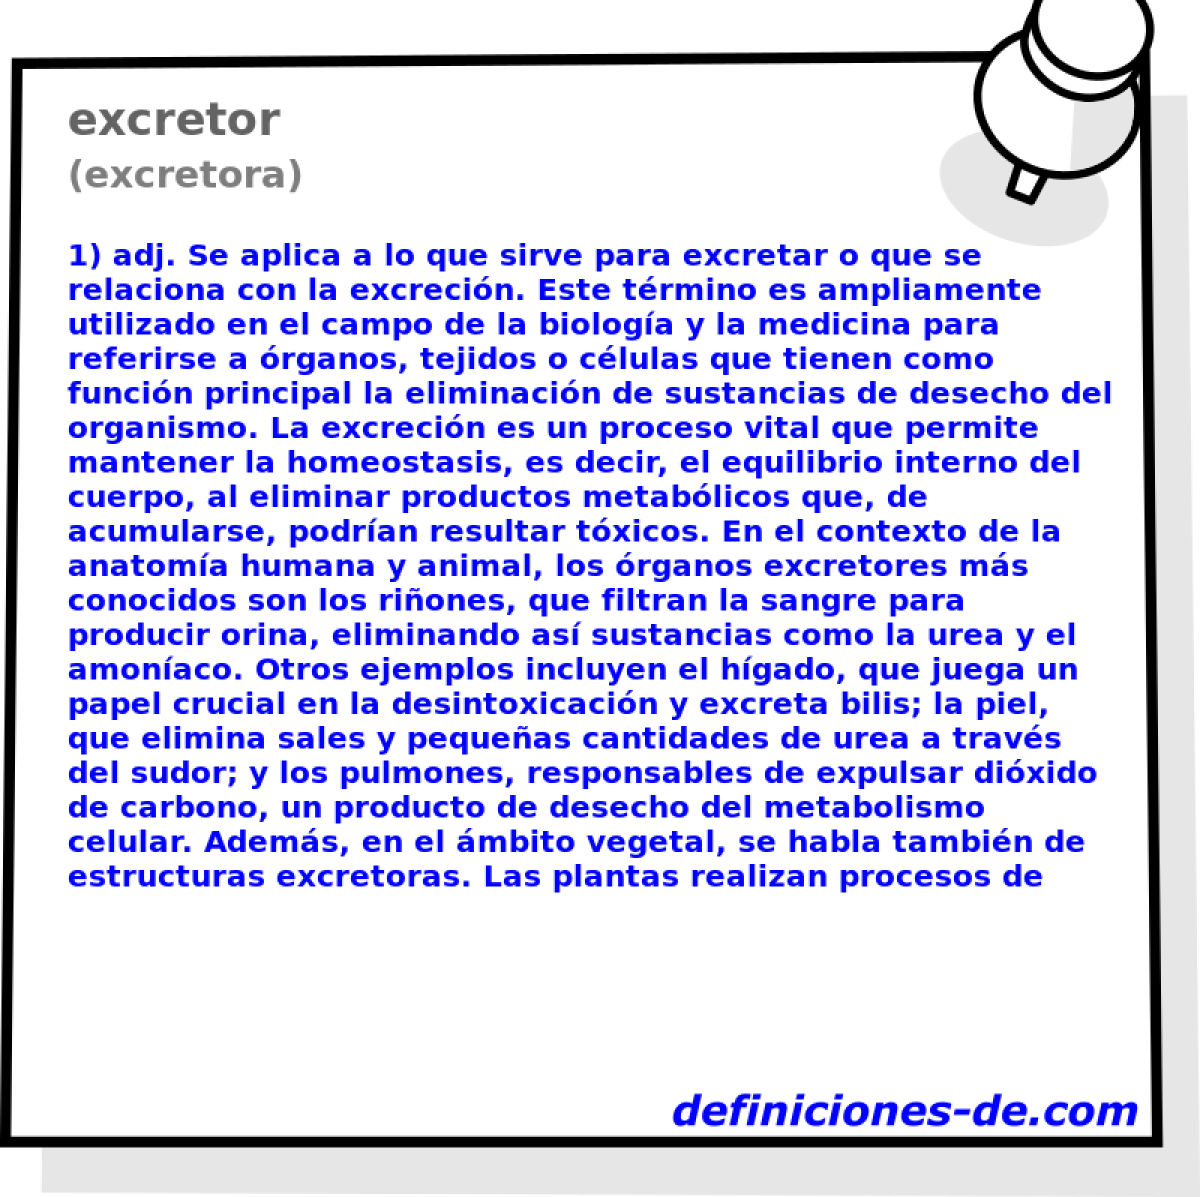 excretor (excretora)